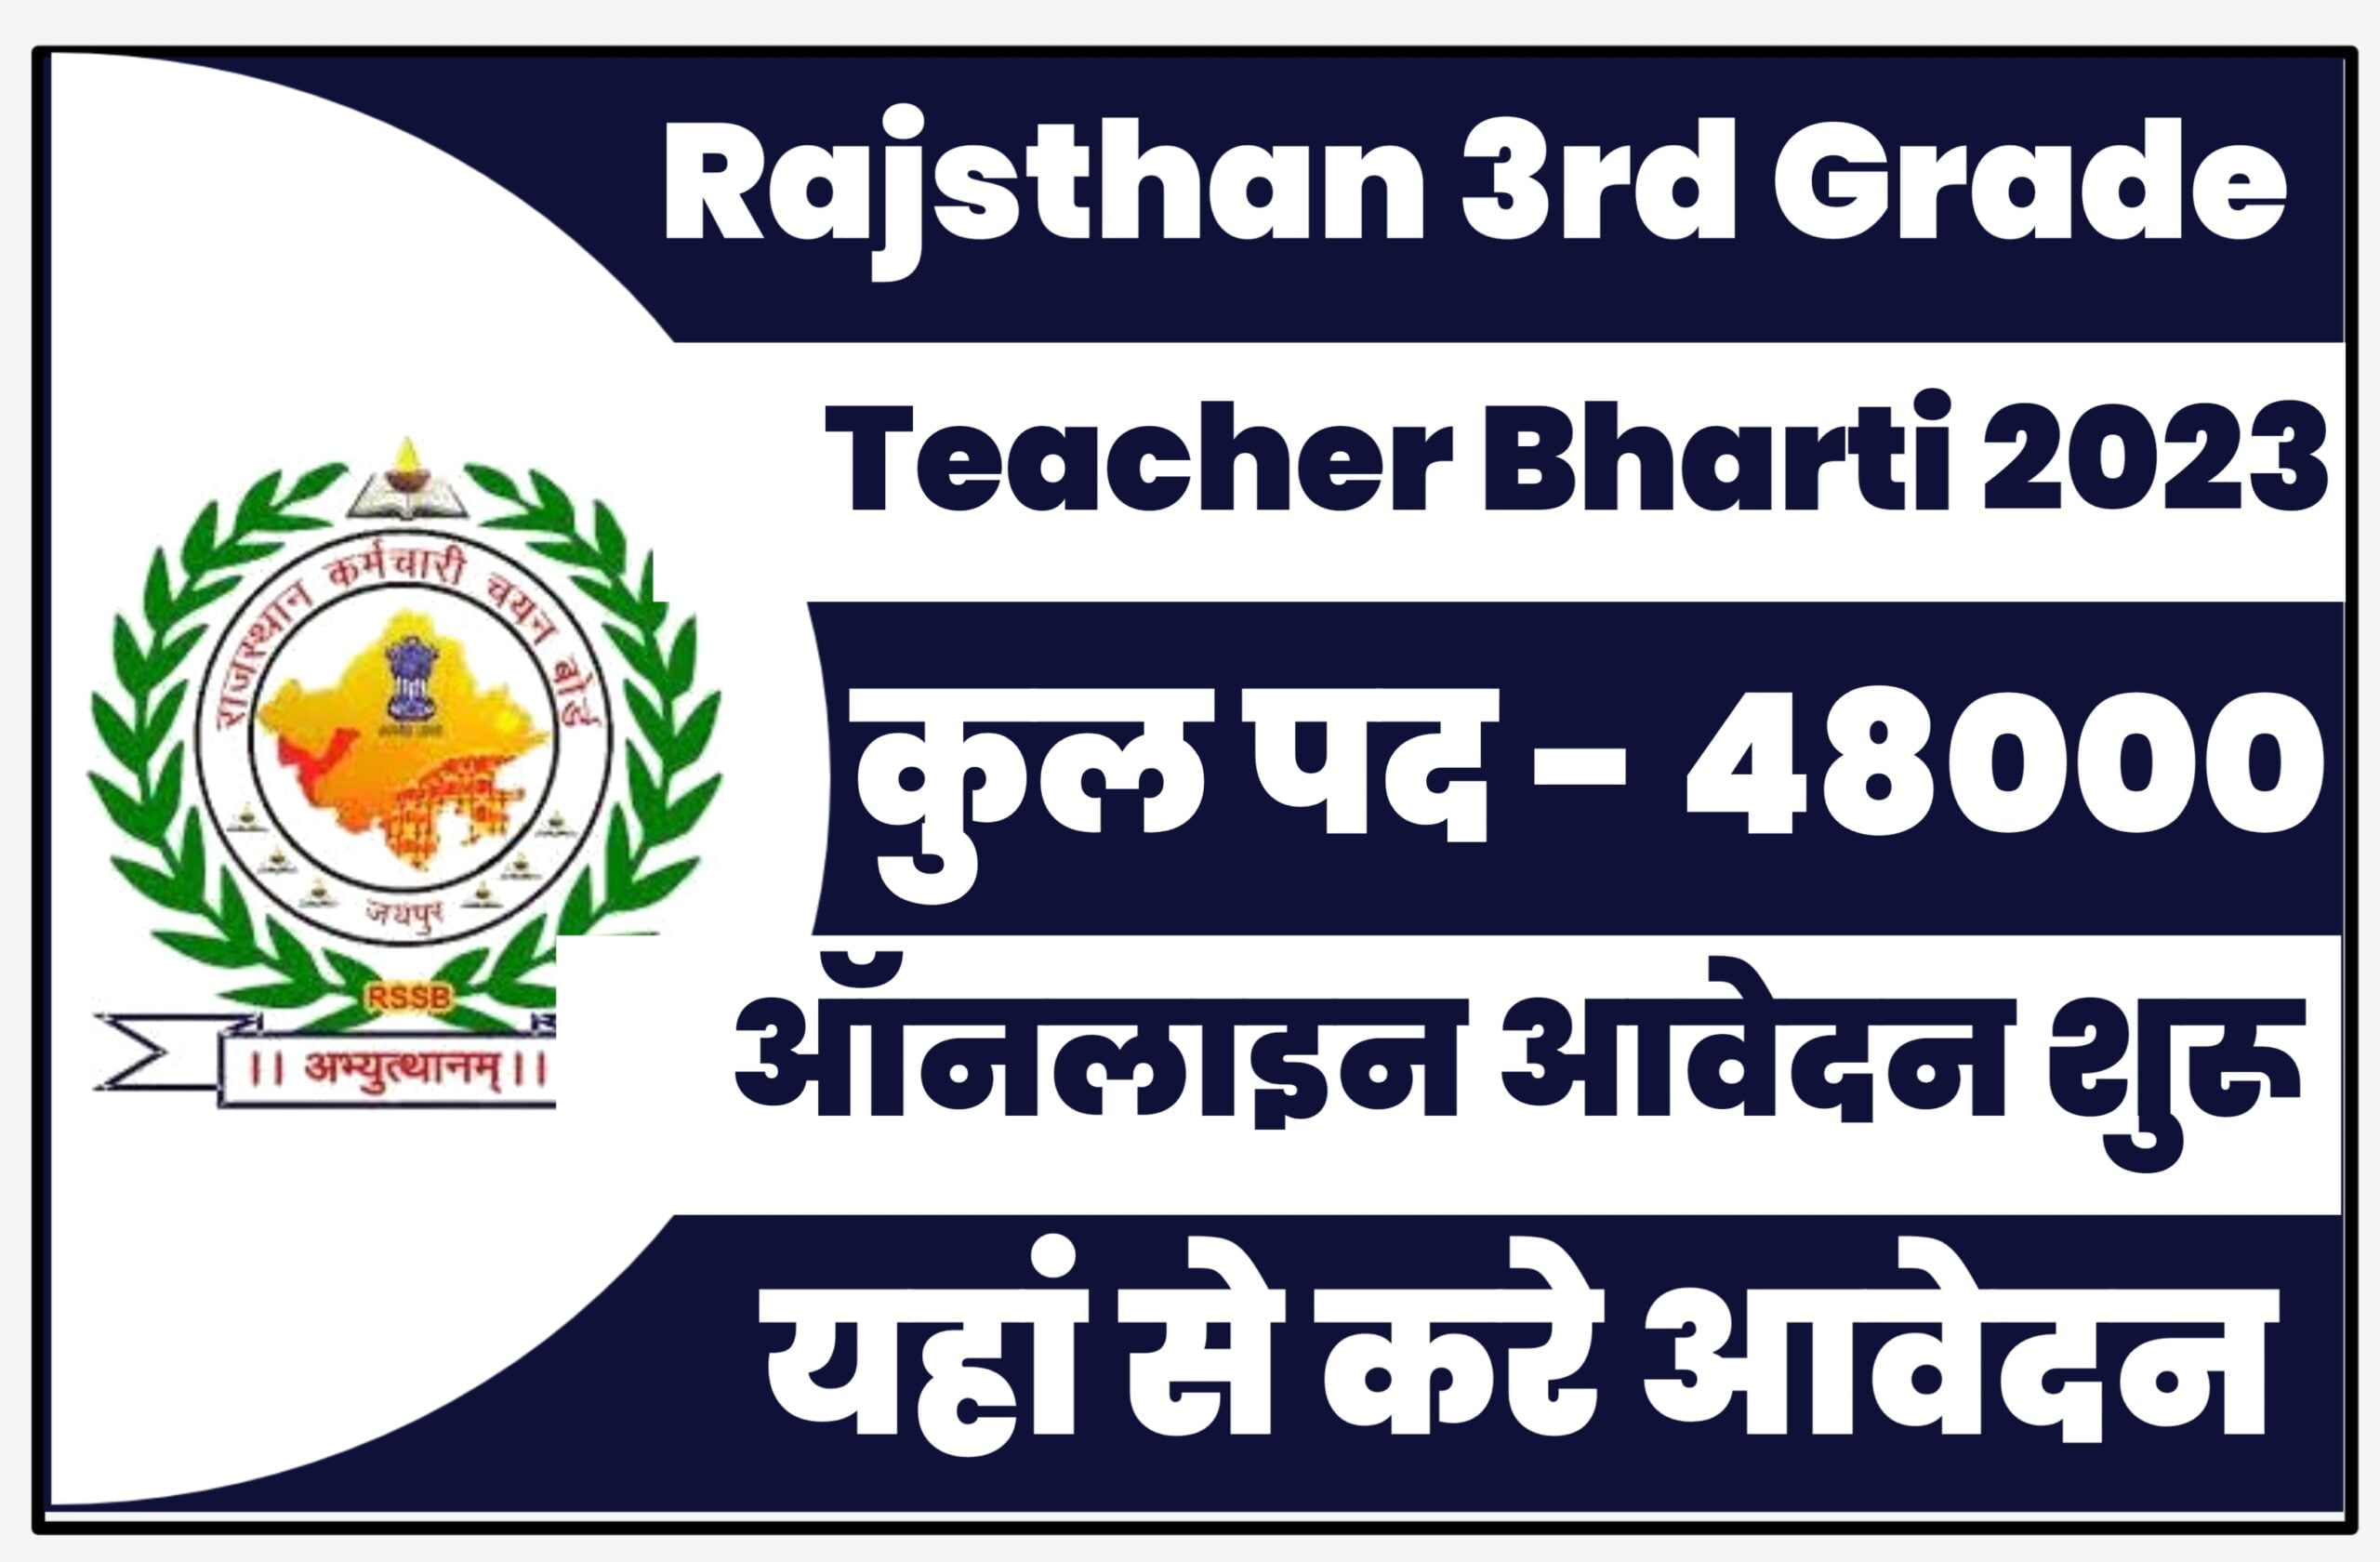 Rajasthan 3rd Grade Teachers Bharti 2023